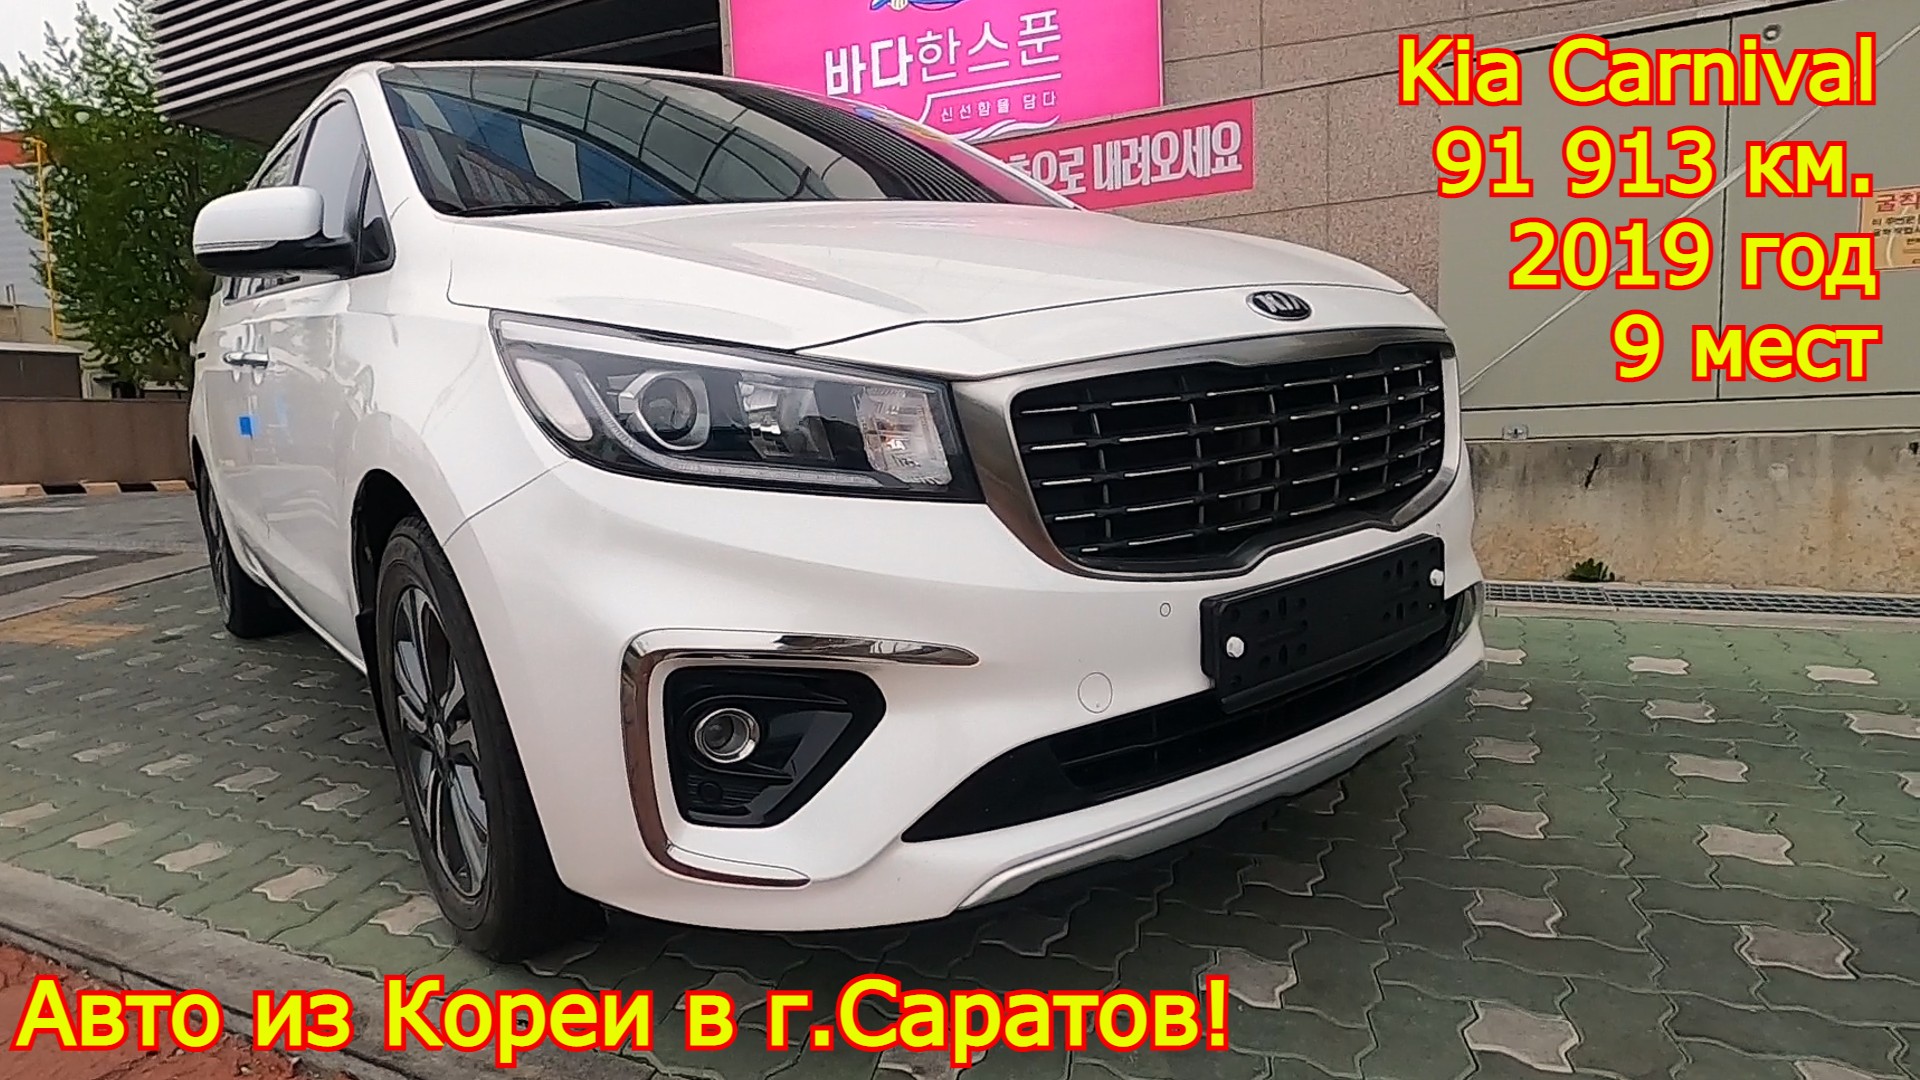 Авто из Кореи в г.Саратов - Kia Carnival, 2019 год, 91 913 км., 9 мест!